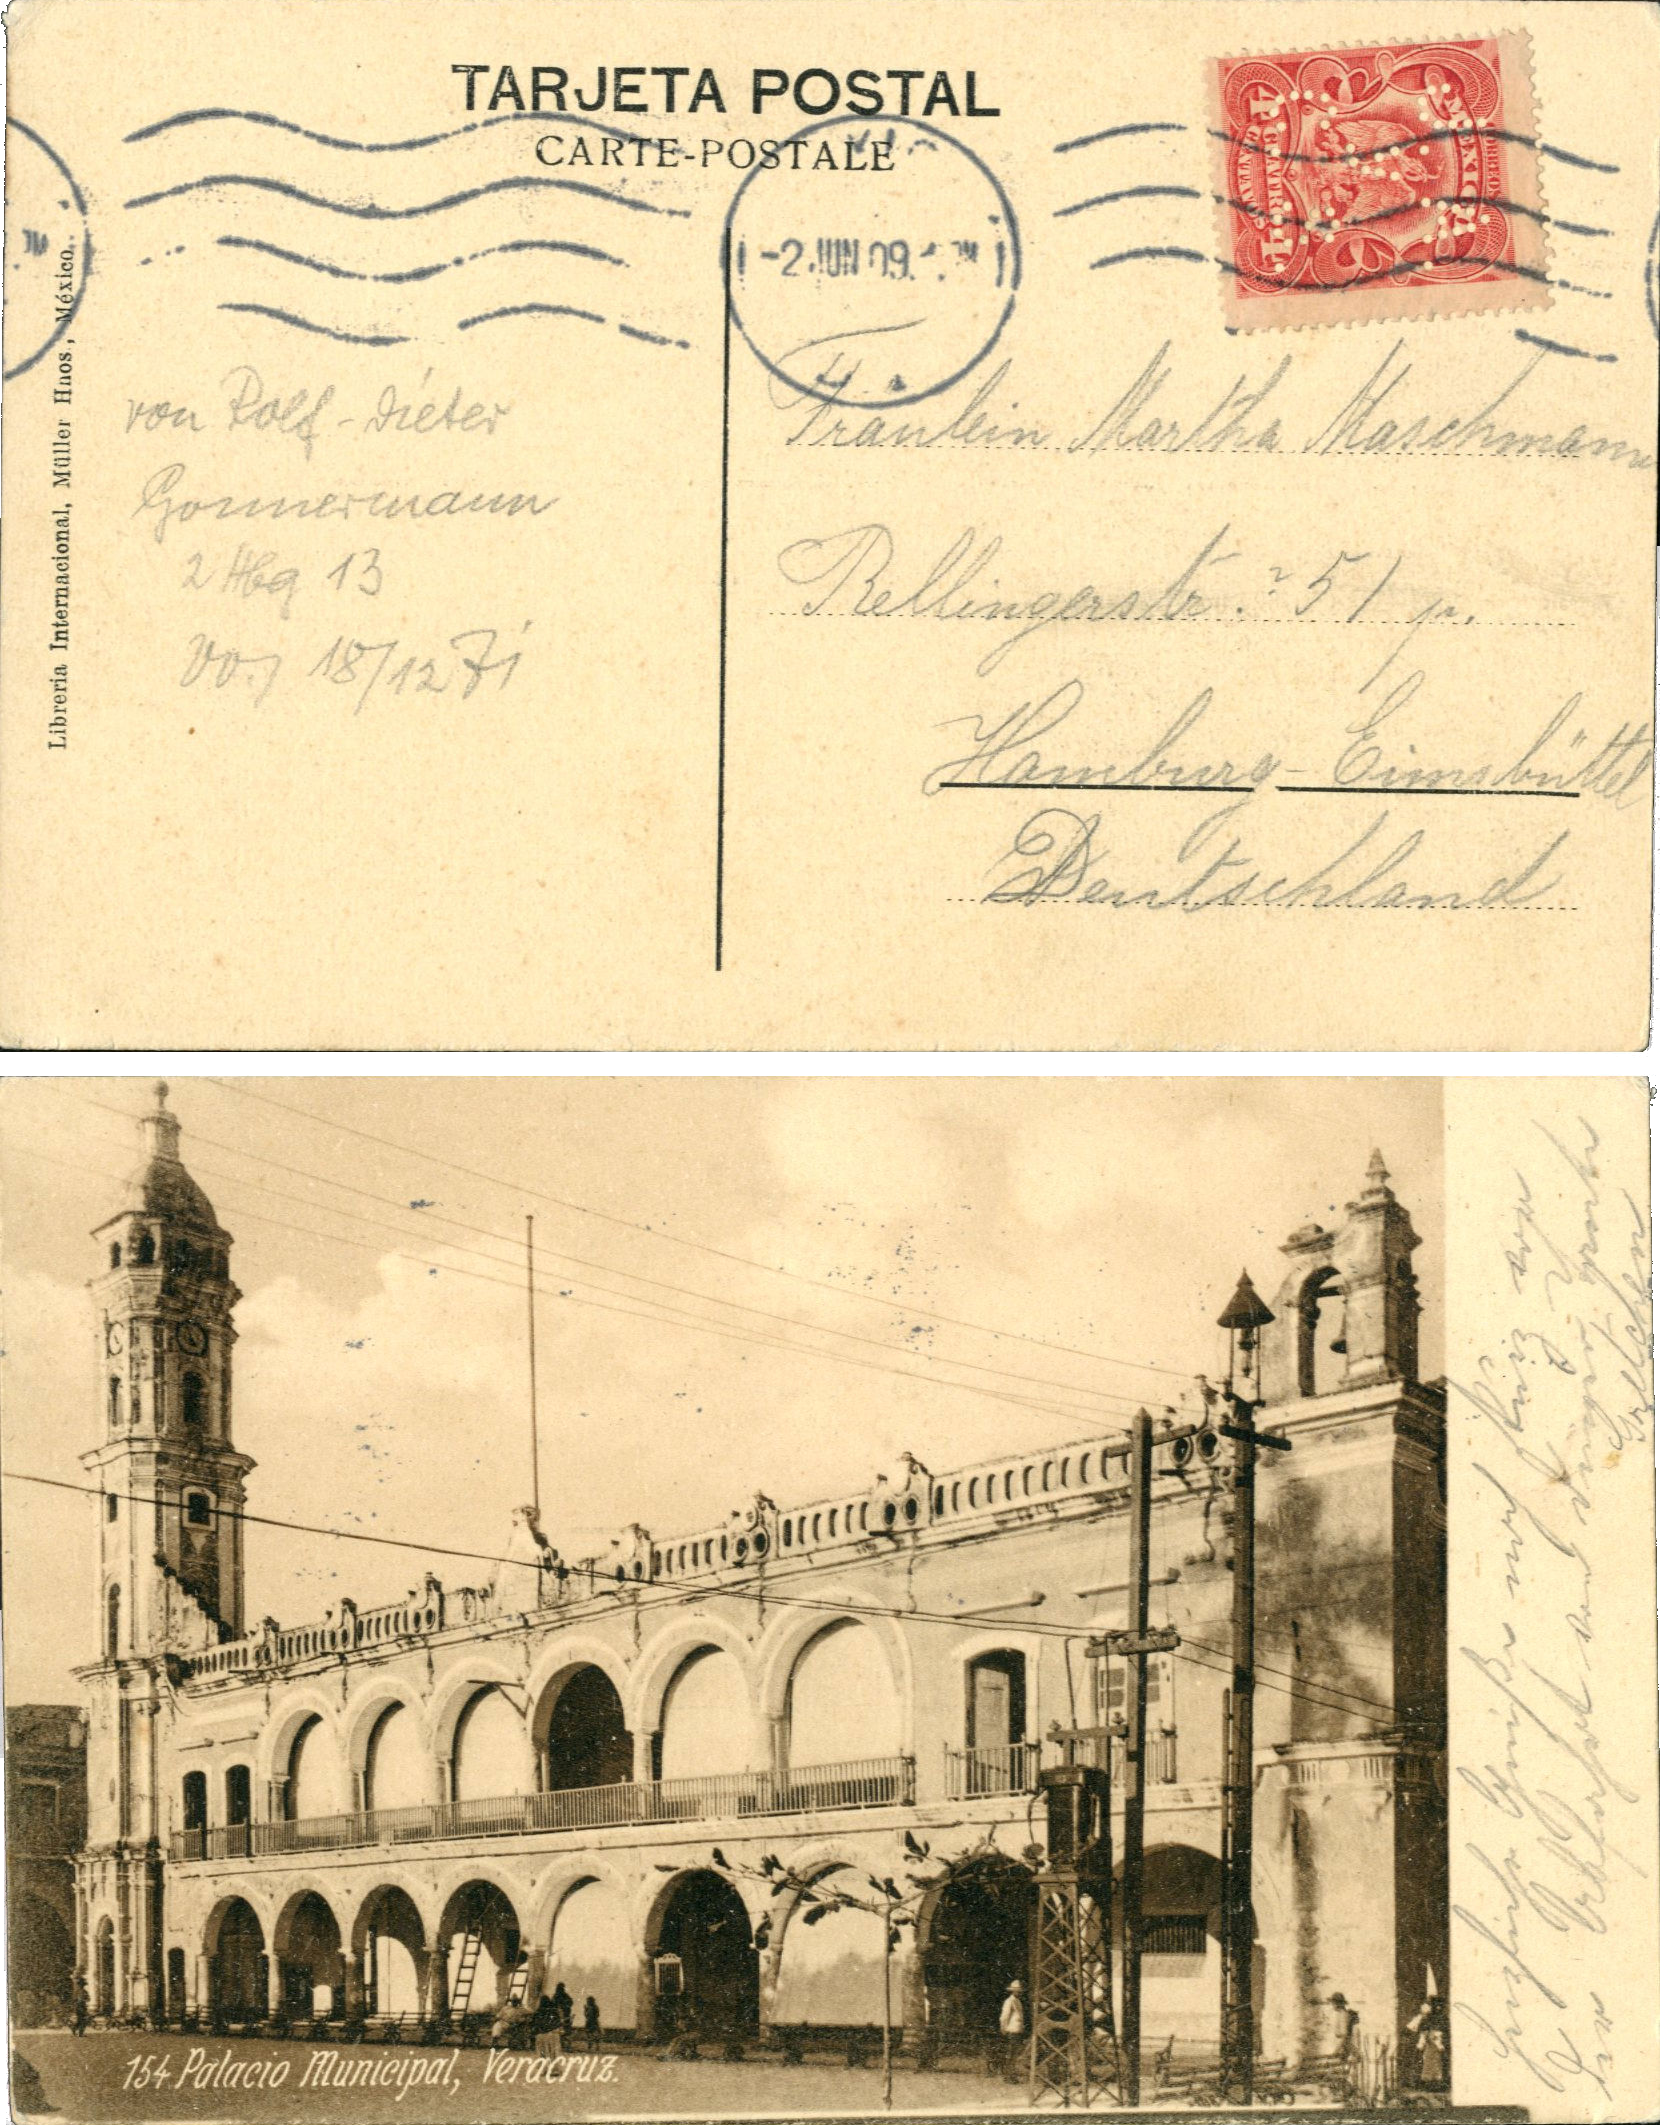 Julio Albert postcard